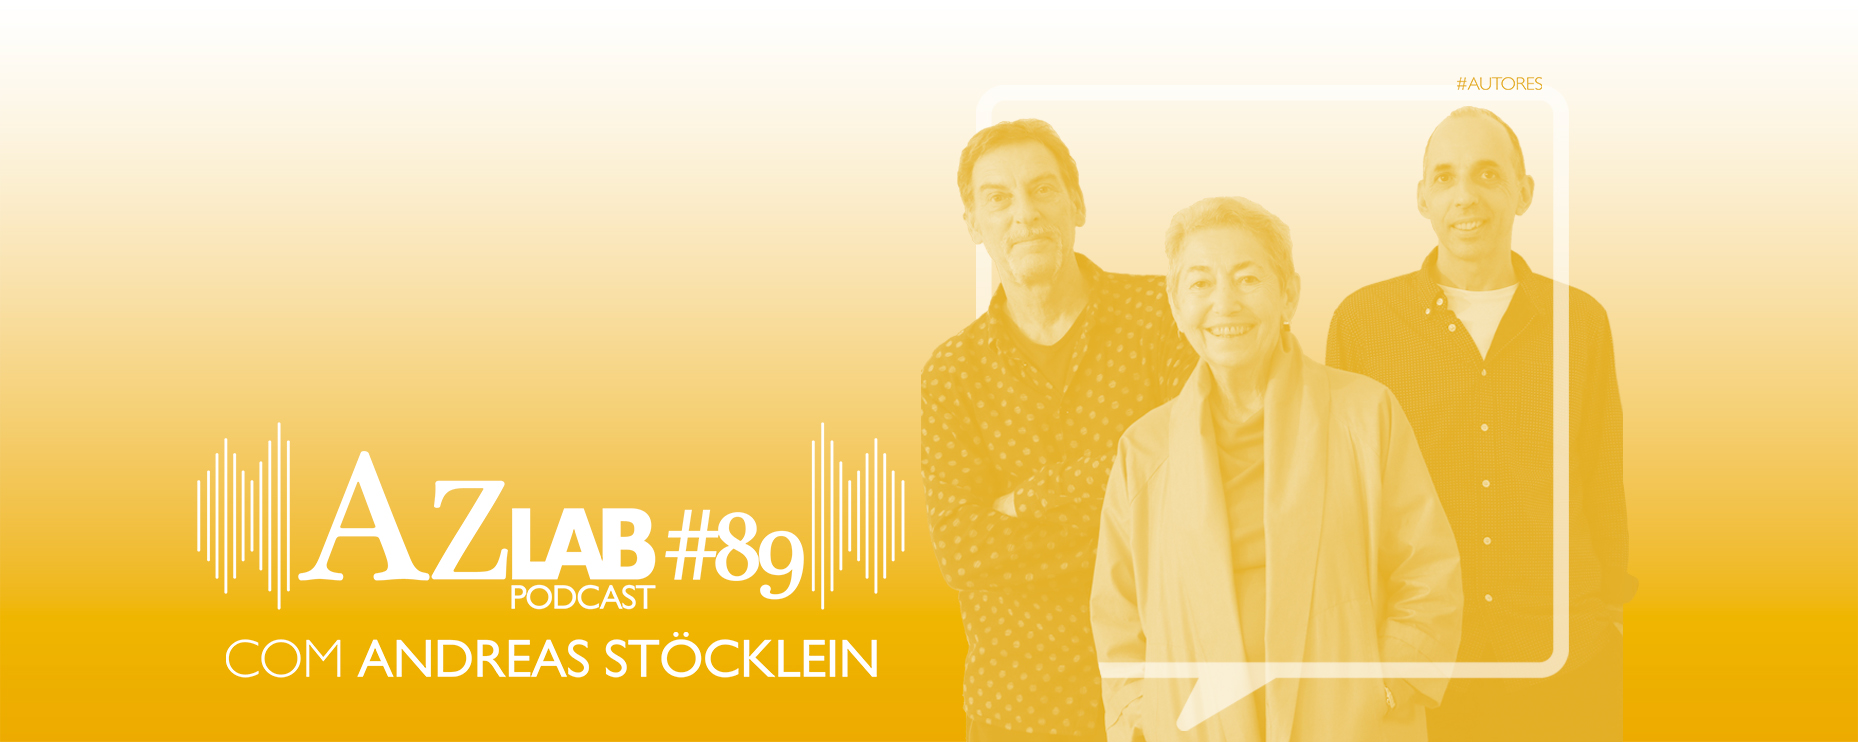 AZLAB#89 [PODCAST] | COM ANDREAS STÖCKLEIN